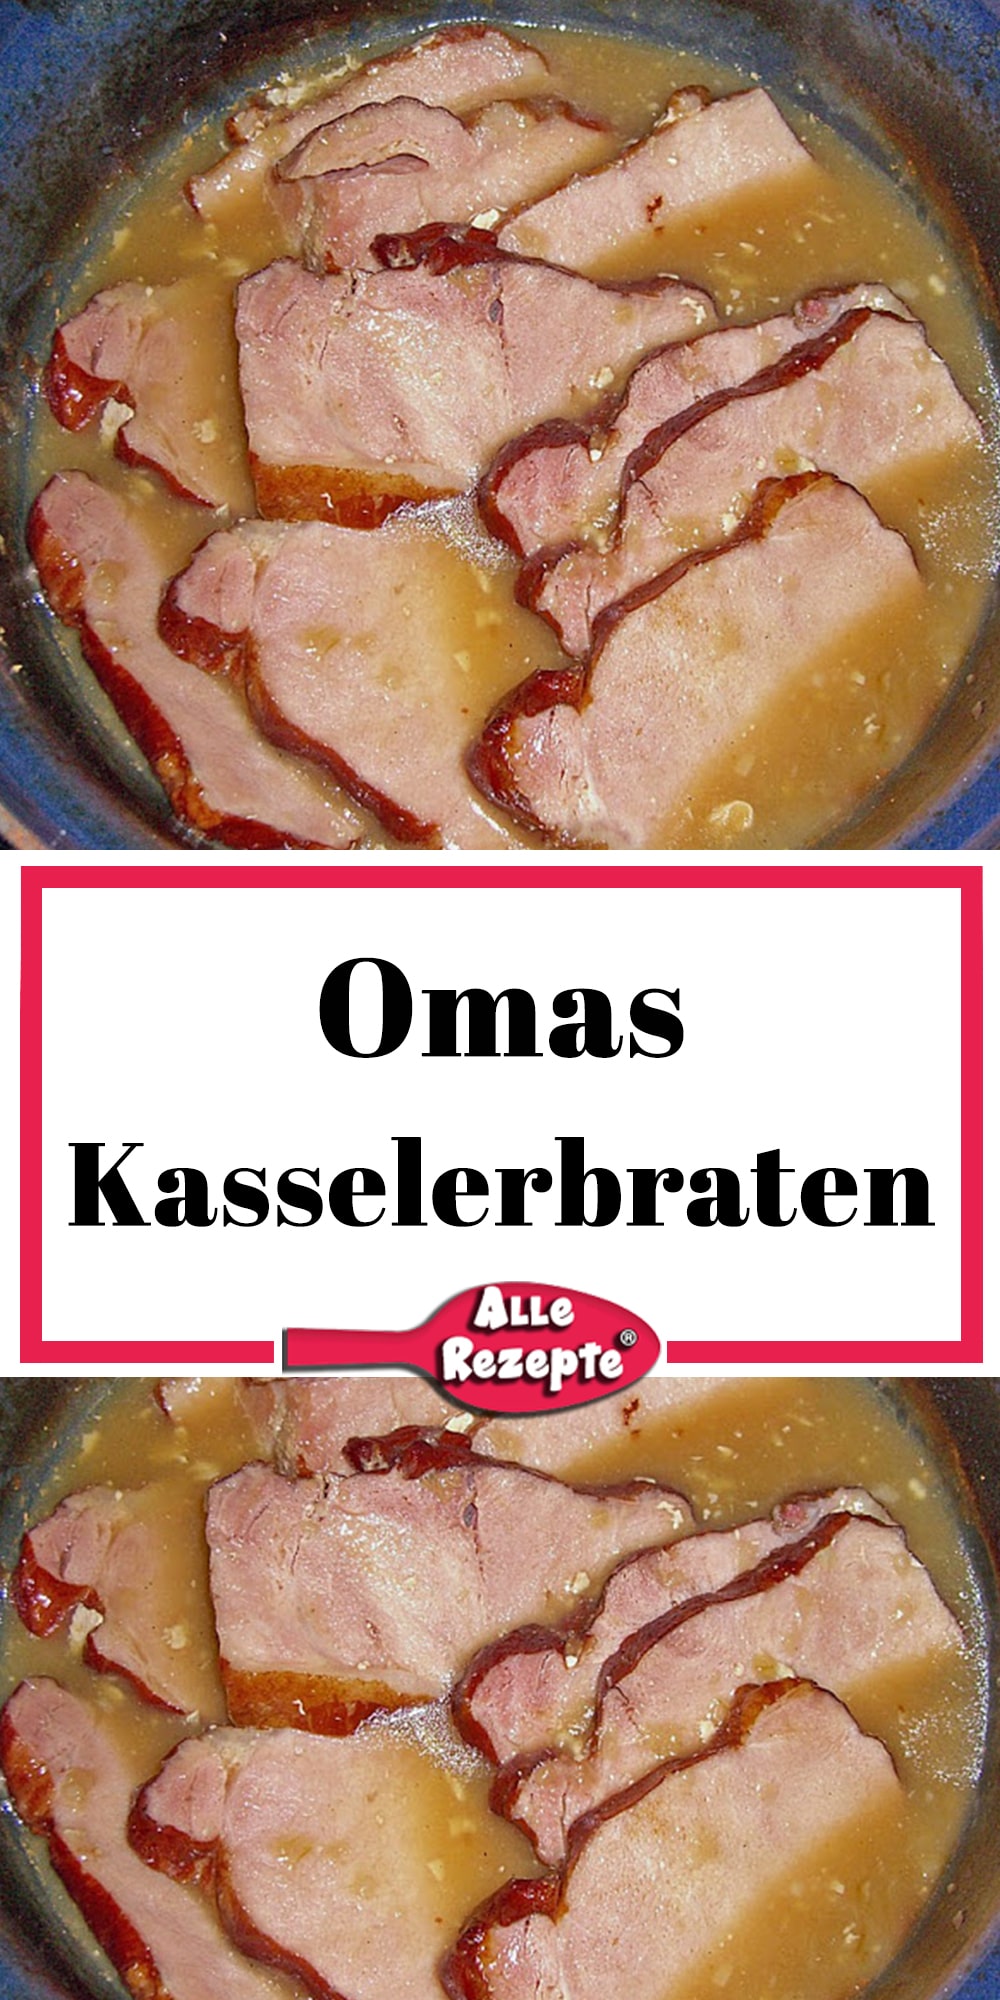 Omas Kasselerbraten - Alle Rezepte